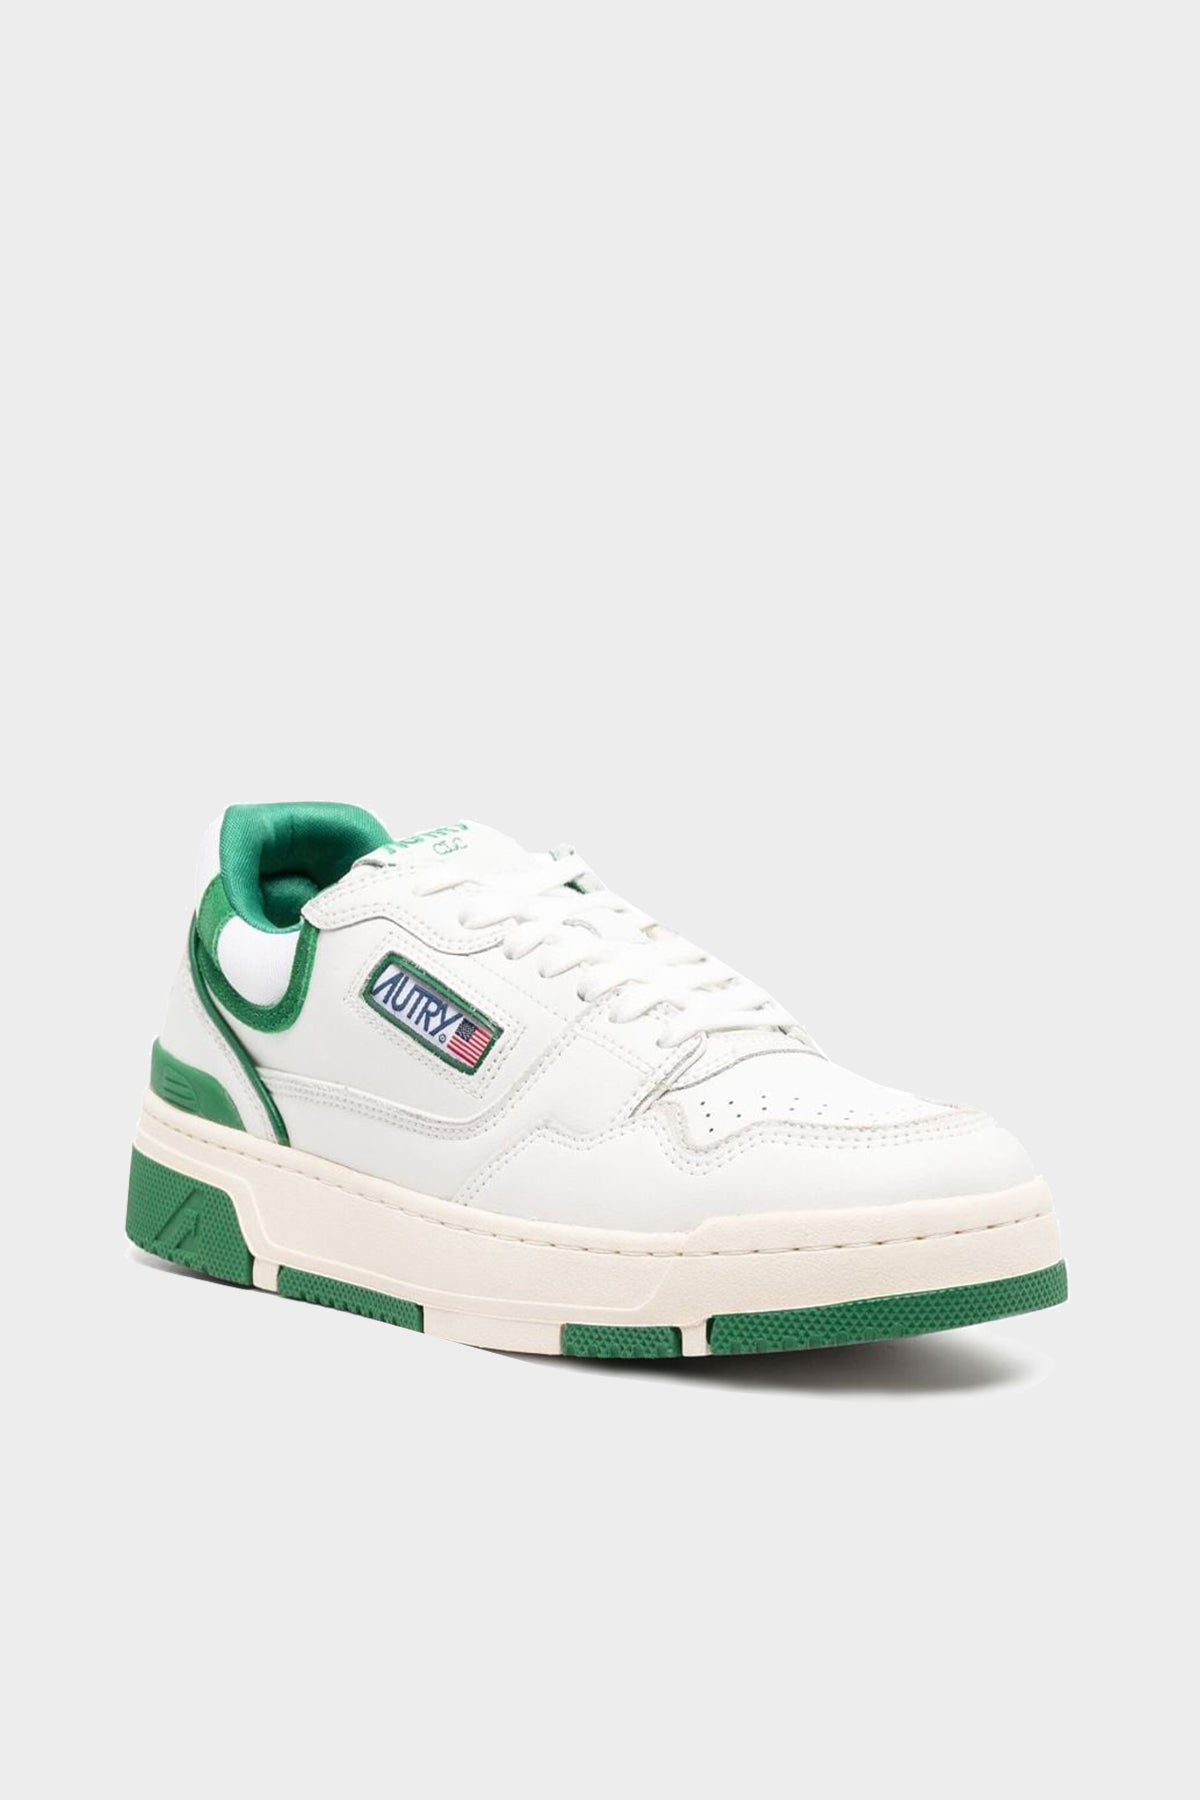 CLC Leather Men Sneaker in Green White - shop-olivia.com